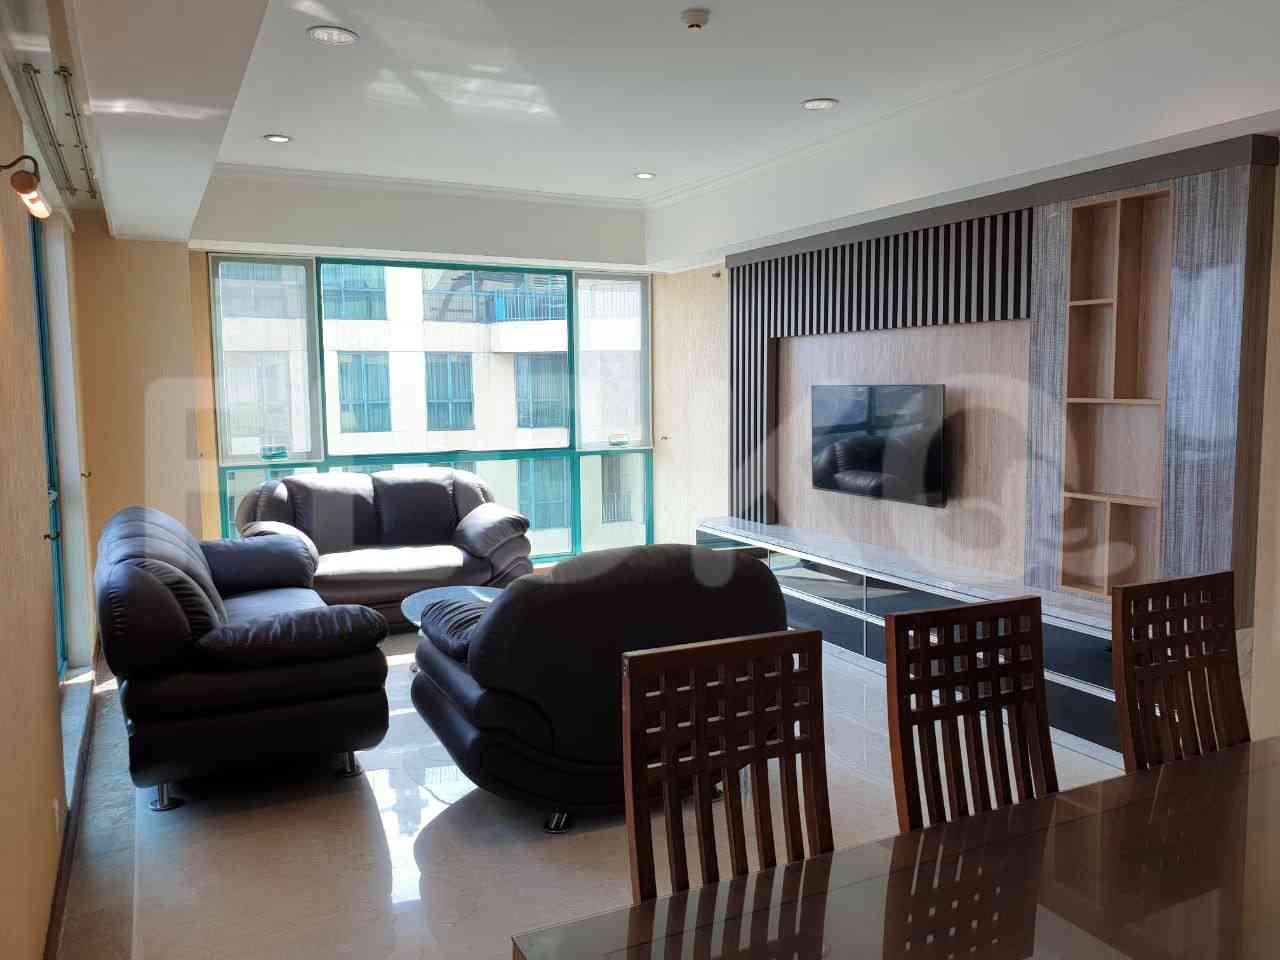 3 Bedroom on 15th Floor for Rent in Casablanca Apartment - ftebc2 4